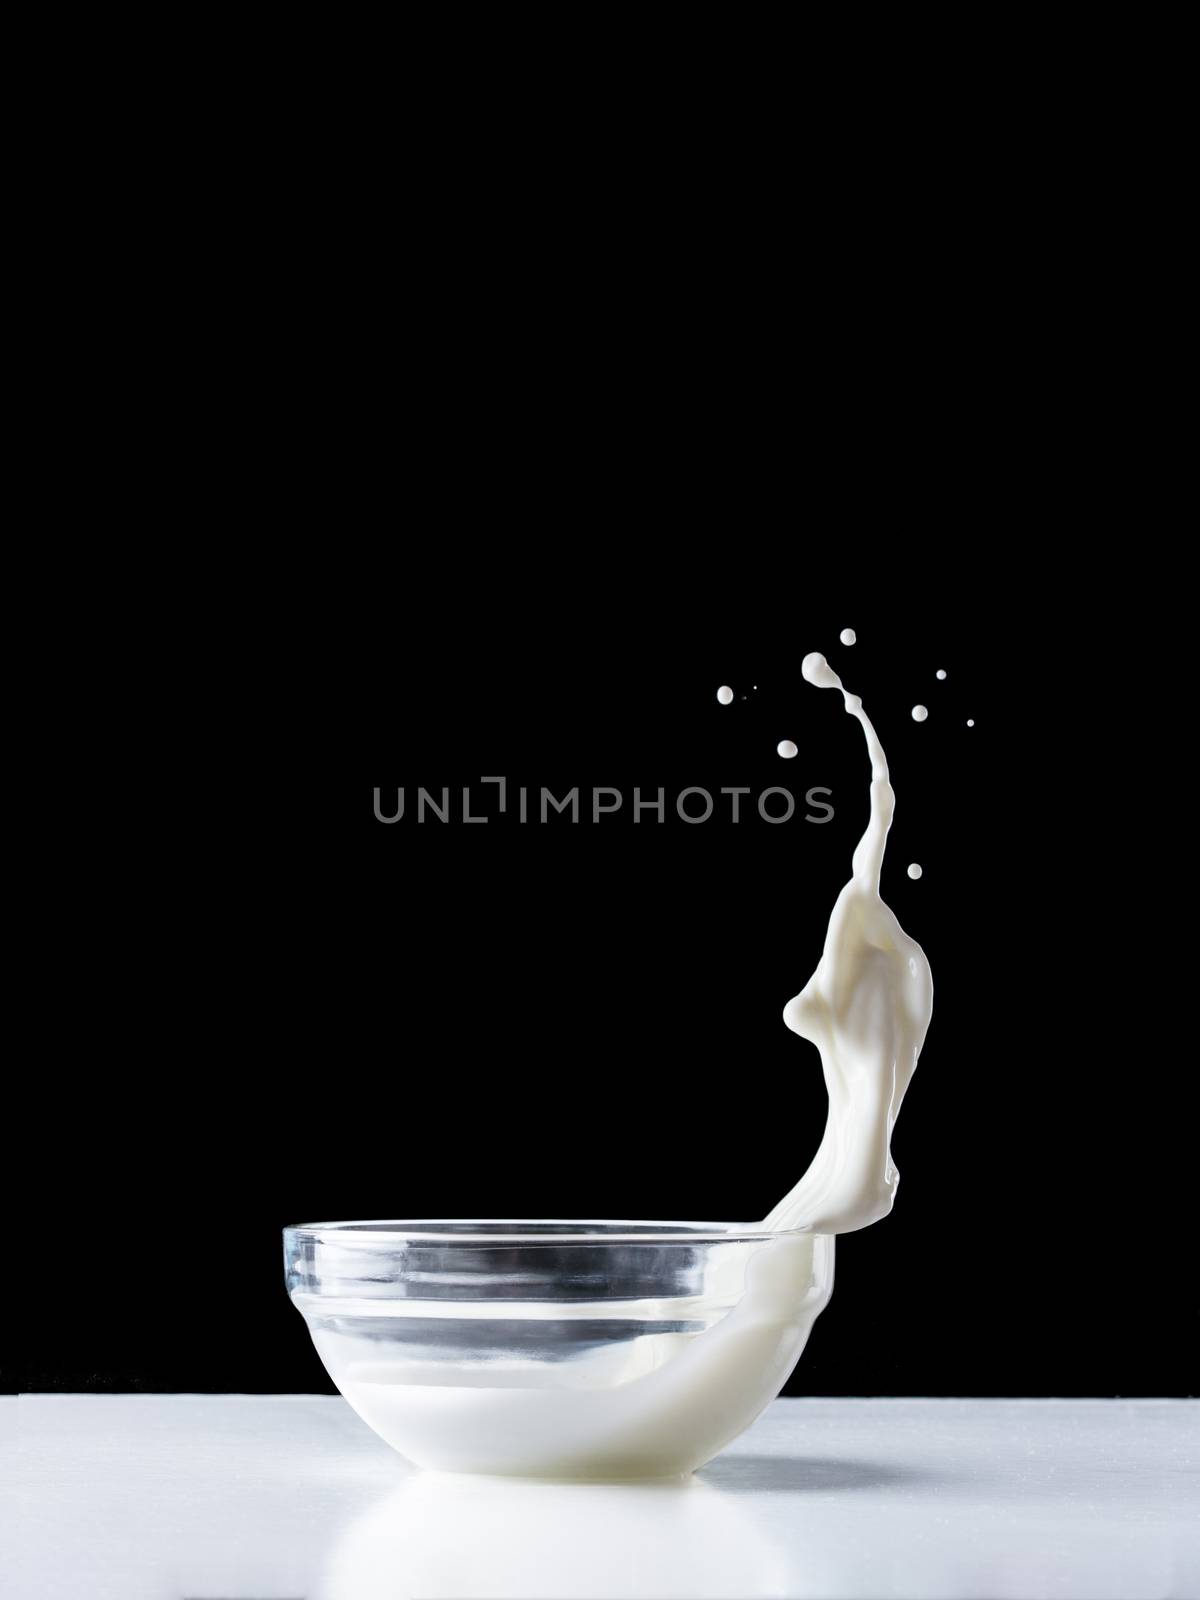 Flying milk or yogurt by fascinadora